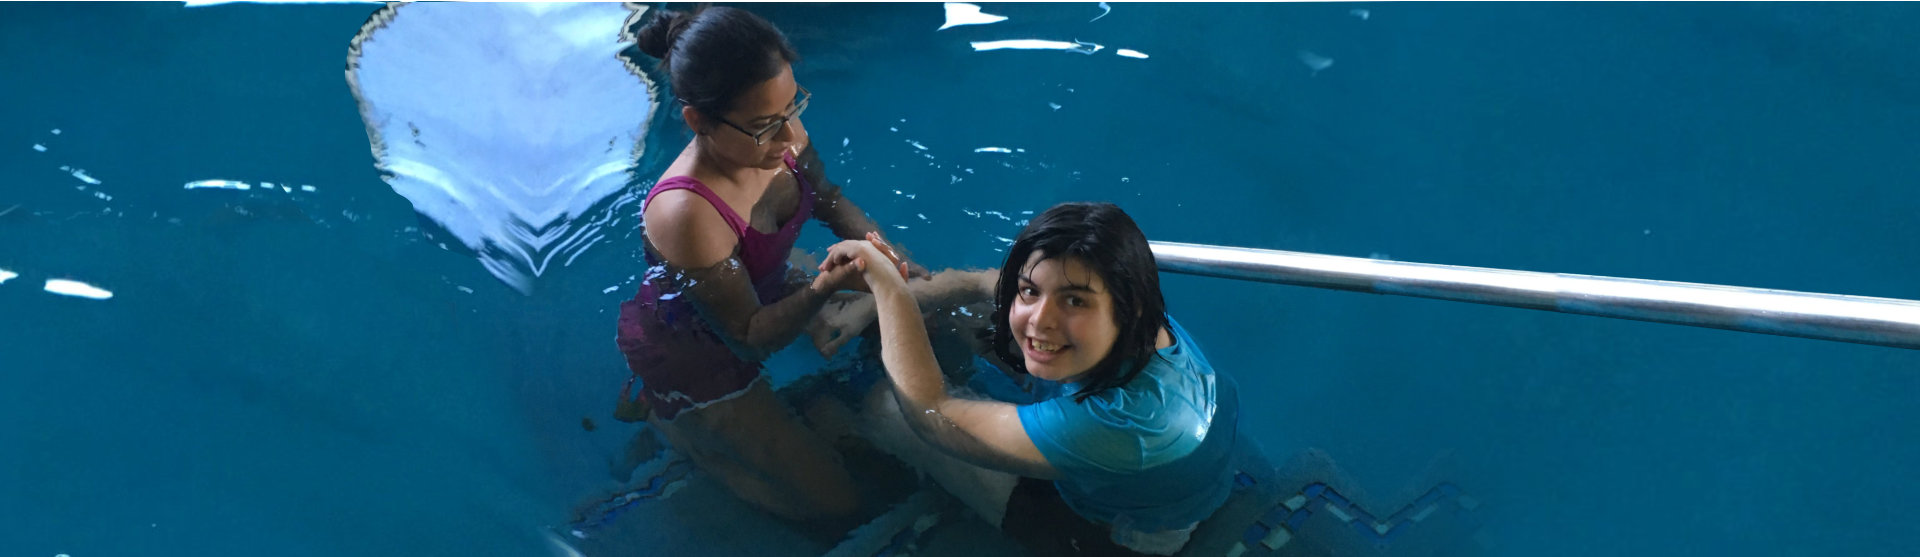 woman teaching a young girl to swim